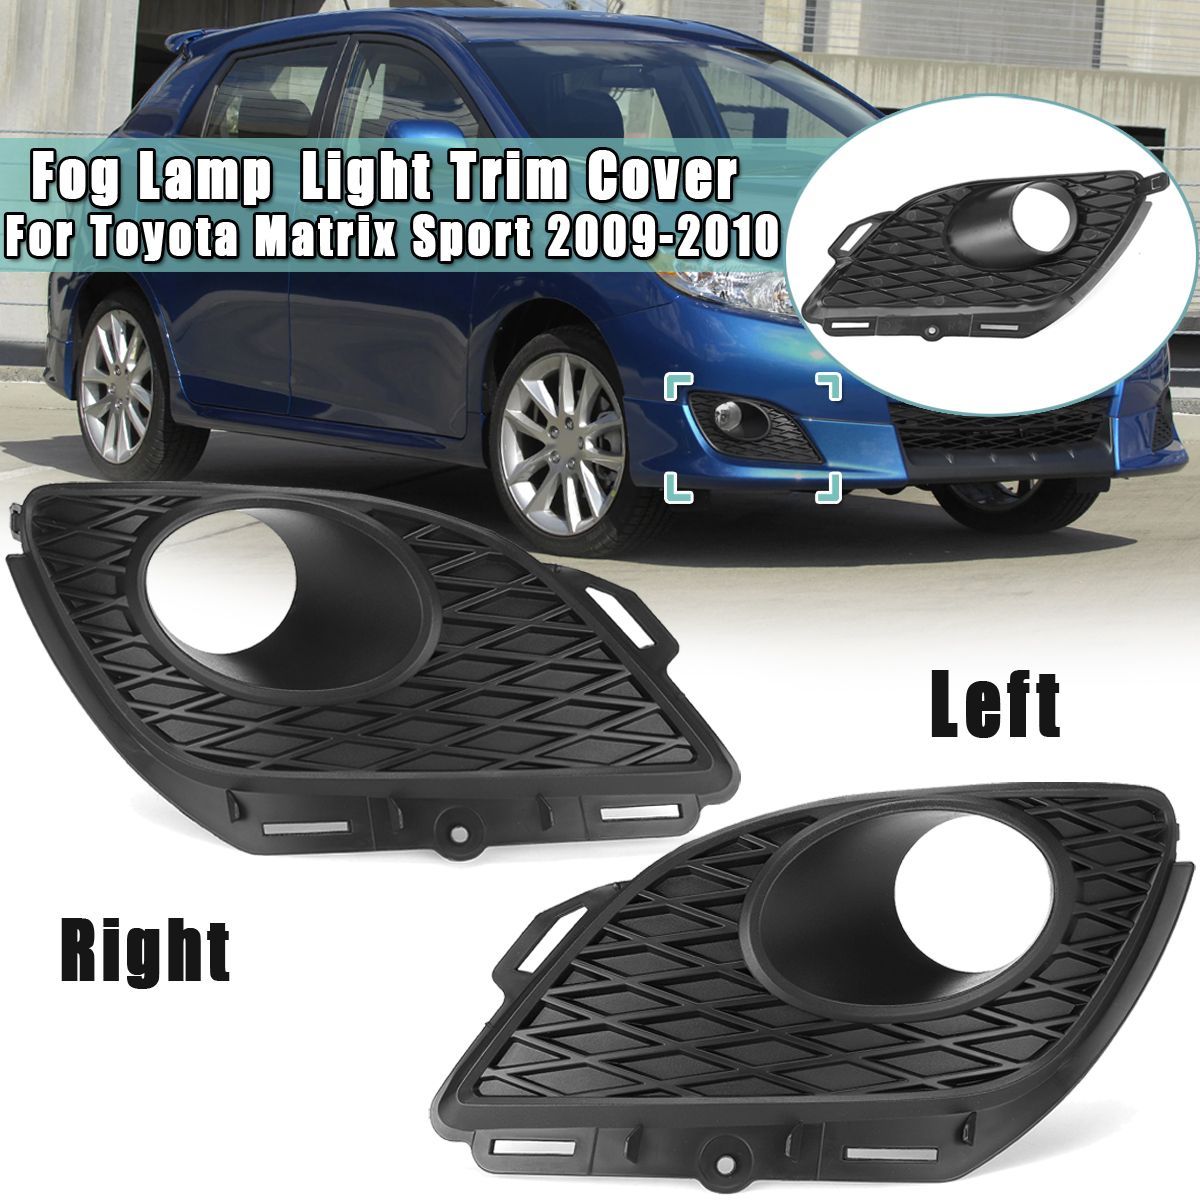 Car-Fog-Lamp-Light-Trim-Cover-Shell-For-Toyota-Matrix-Sport-2009-2010-1661590